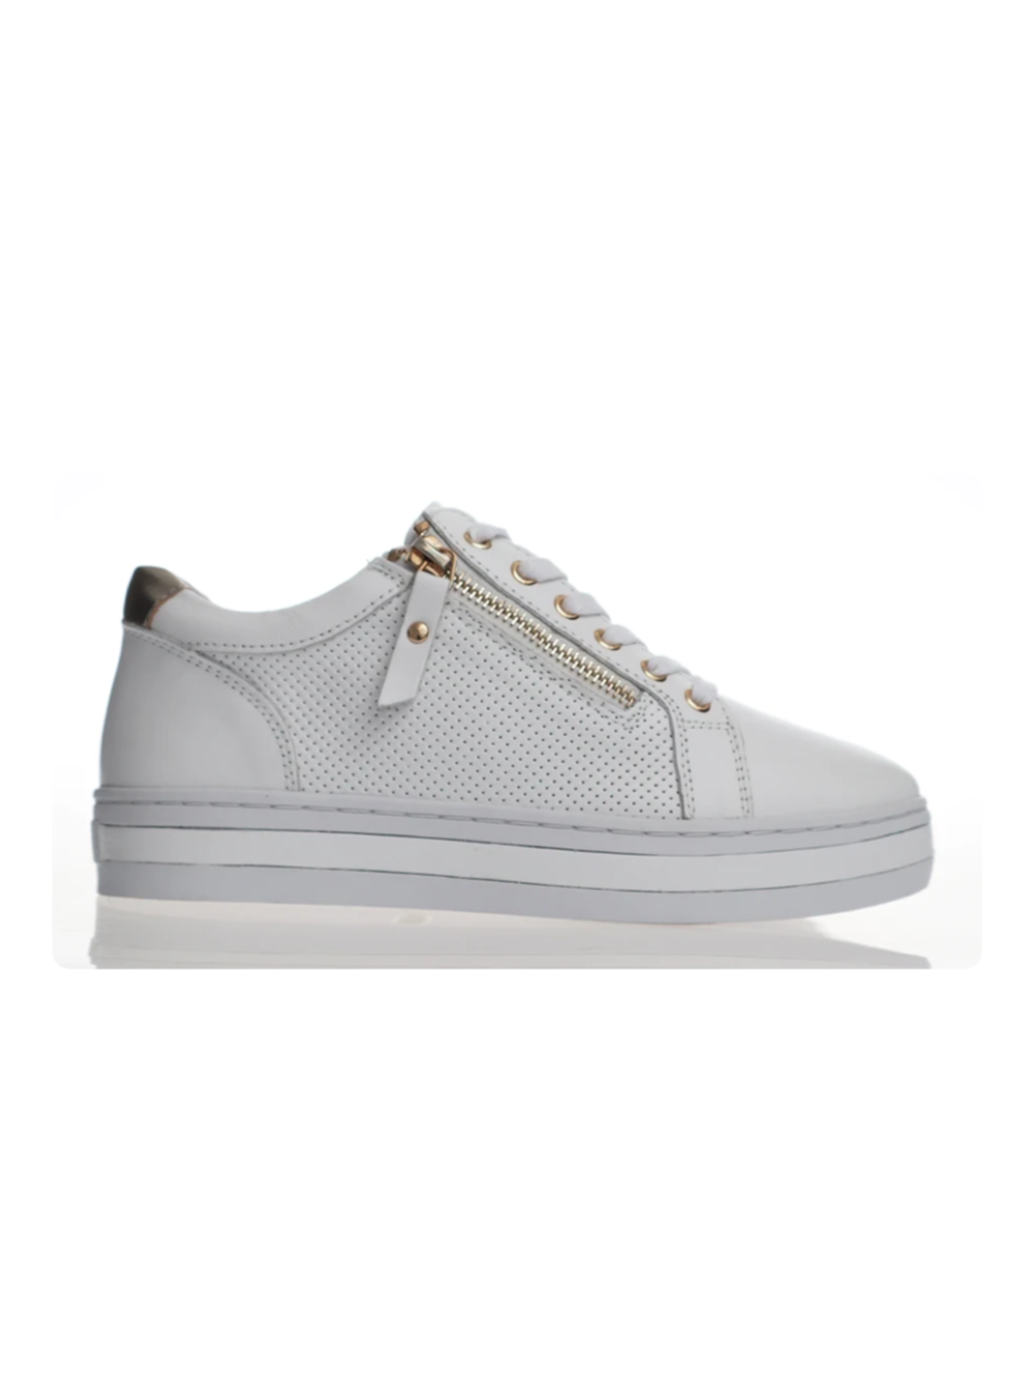 Alfie & Evie Pinny White Gold Leather Sneaker - White